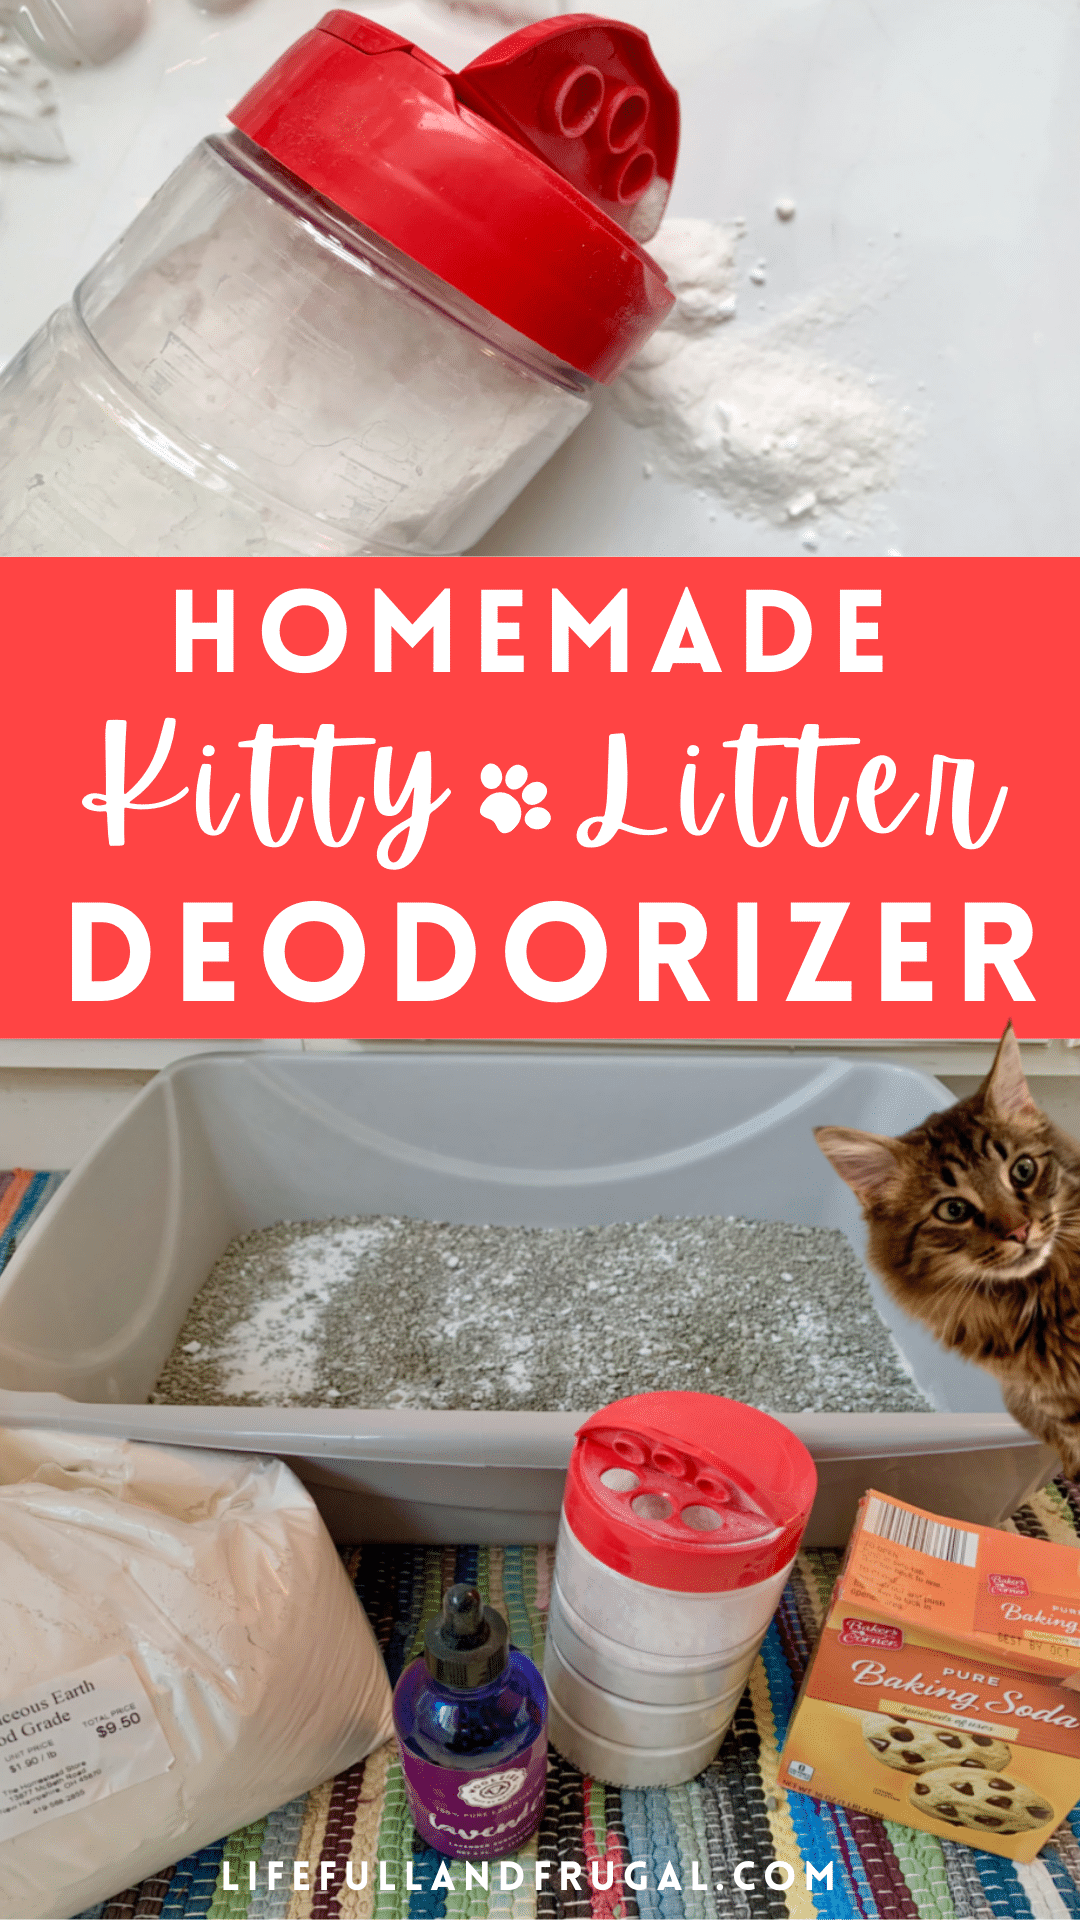 homemade kitty litter deodorizer recipe pin life full and frugal